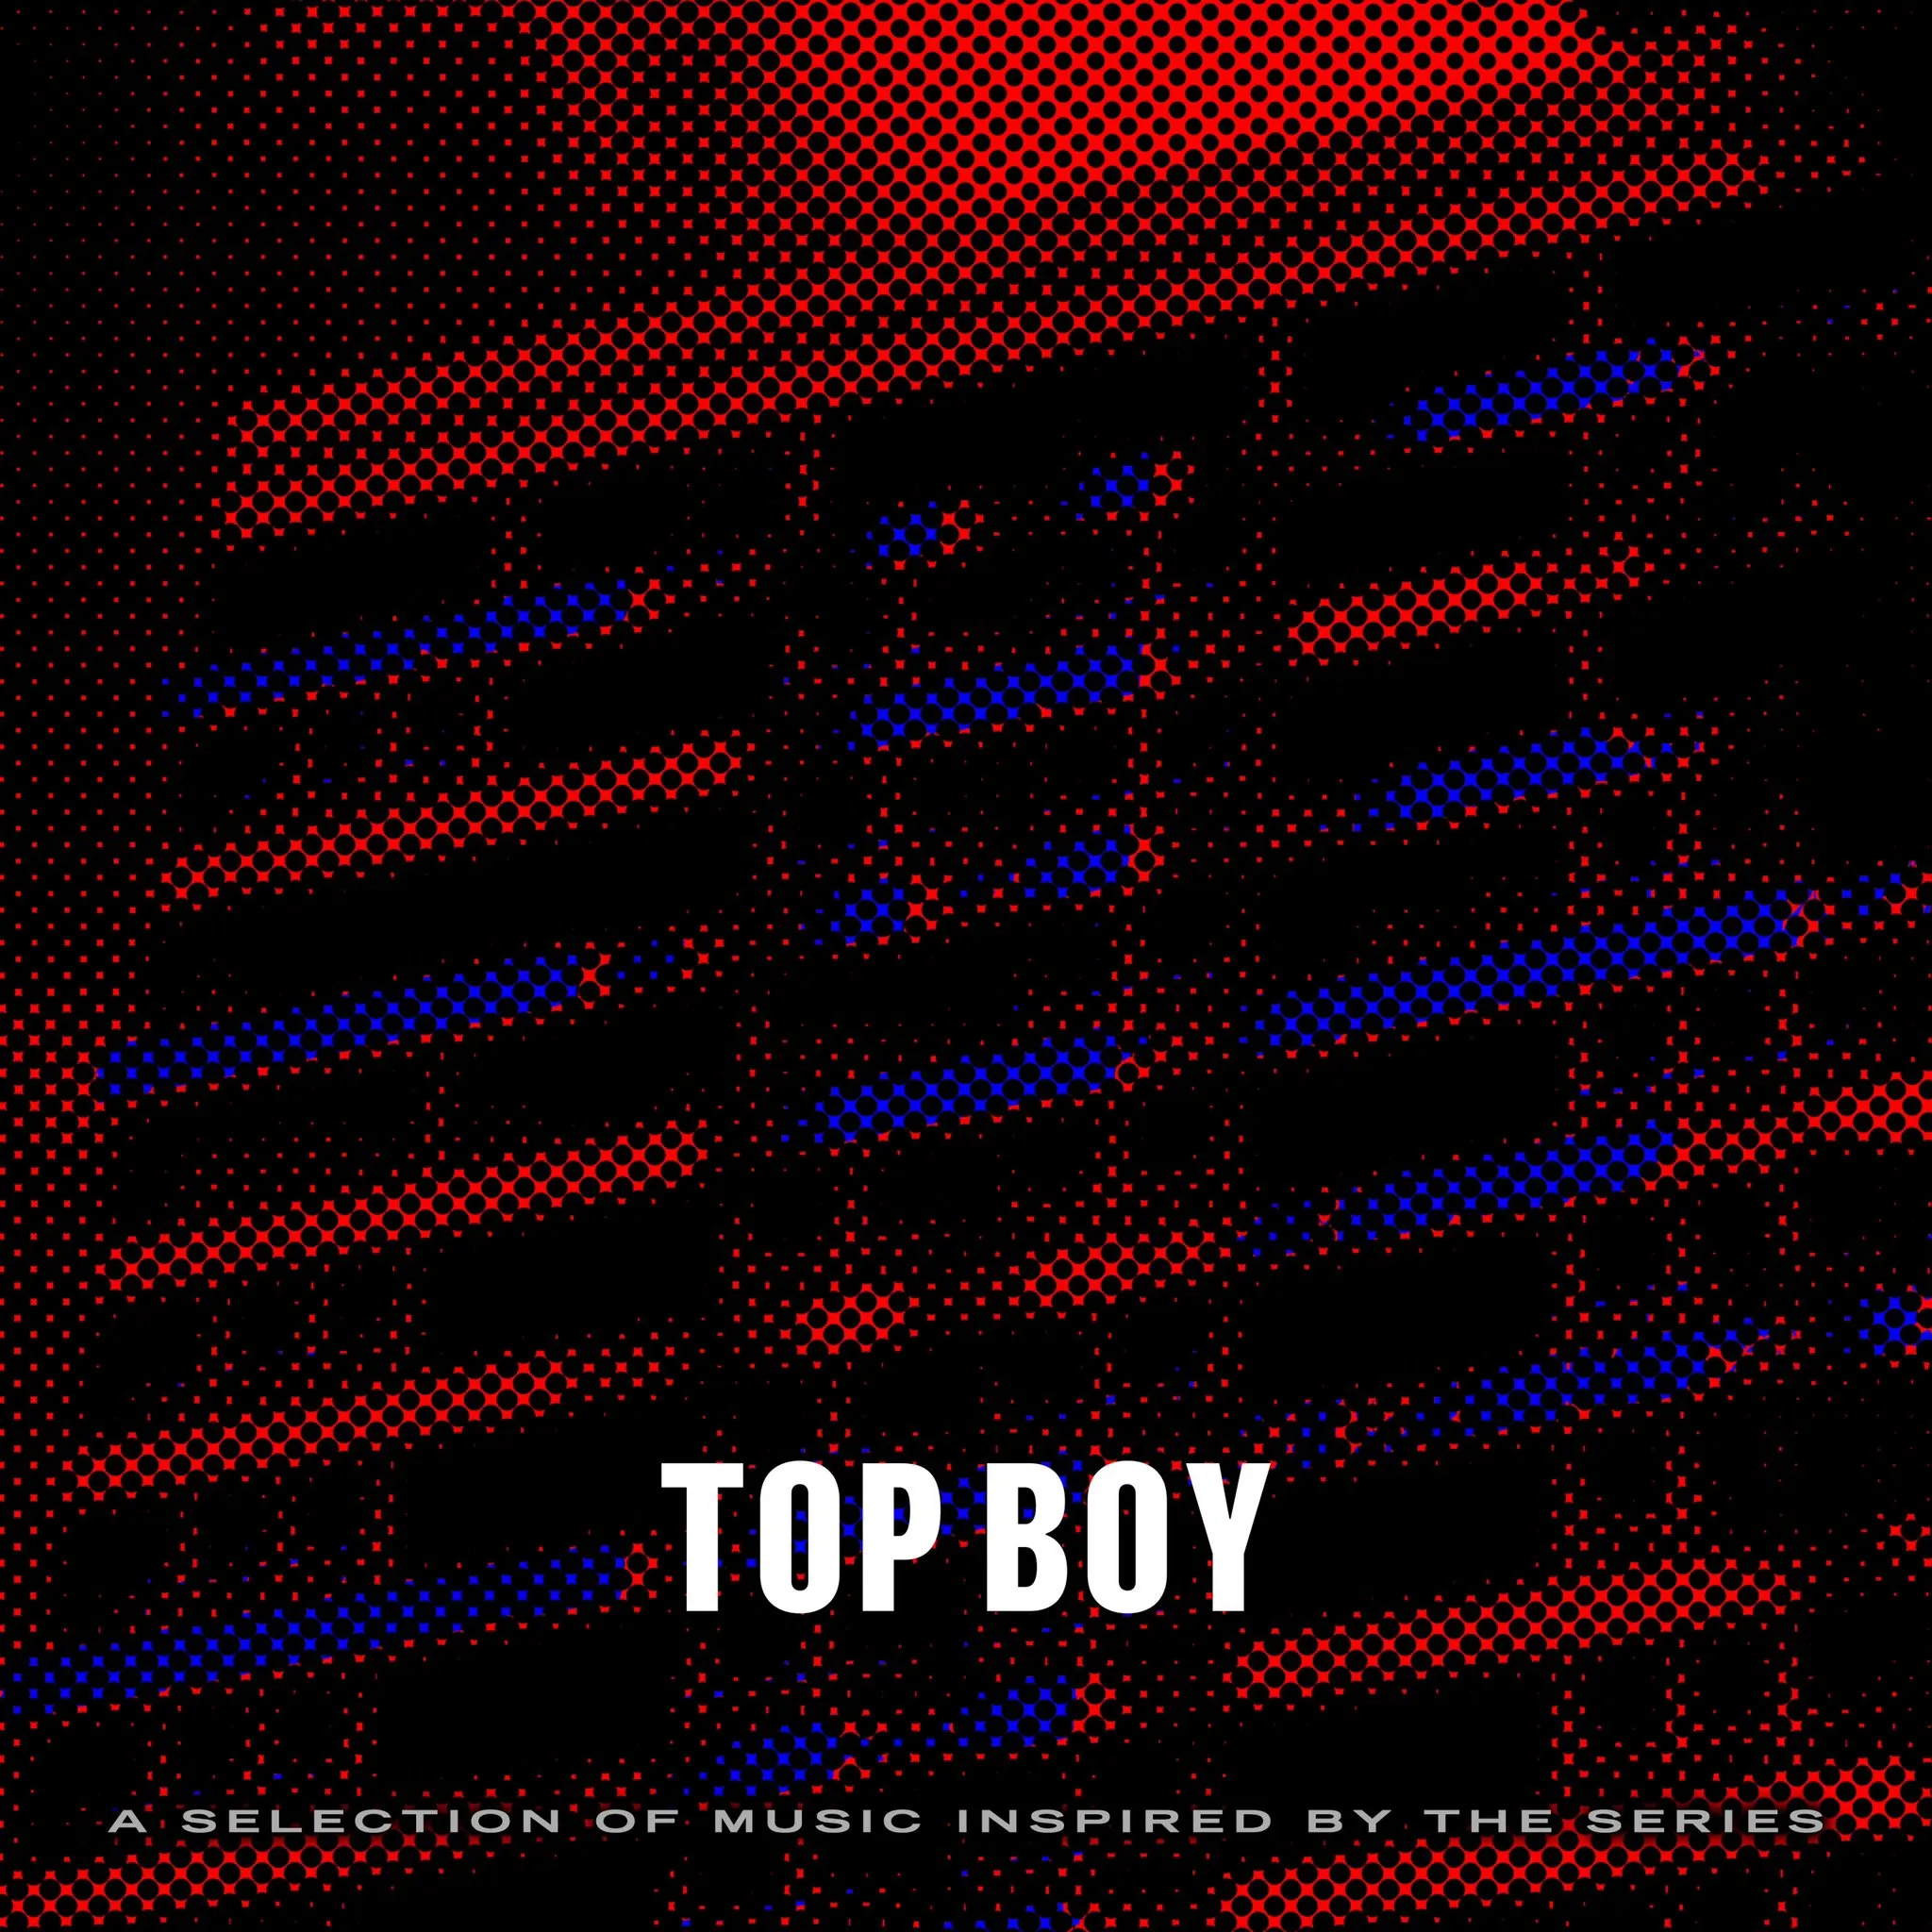 topboy soundtrack